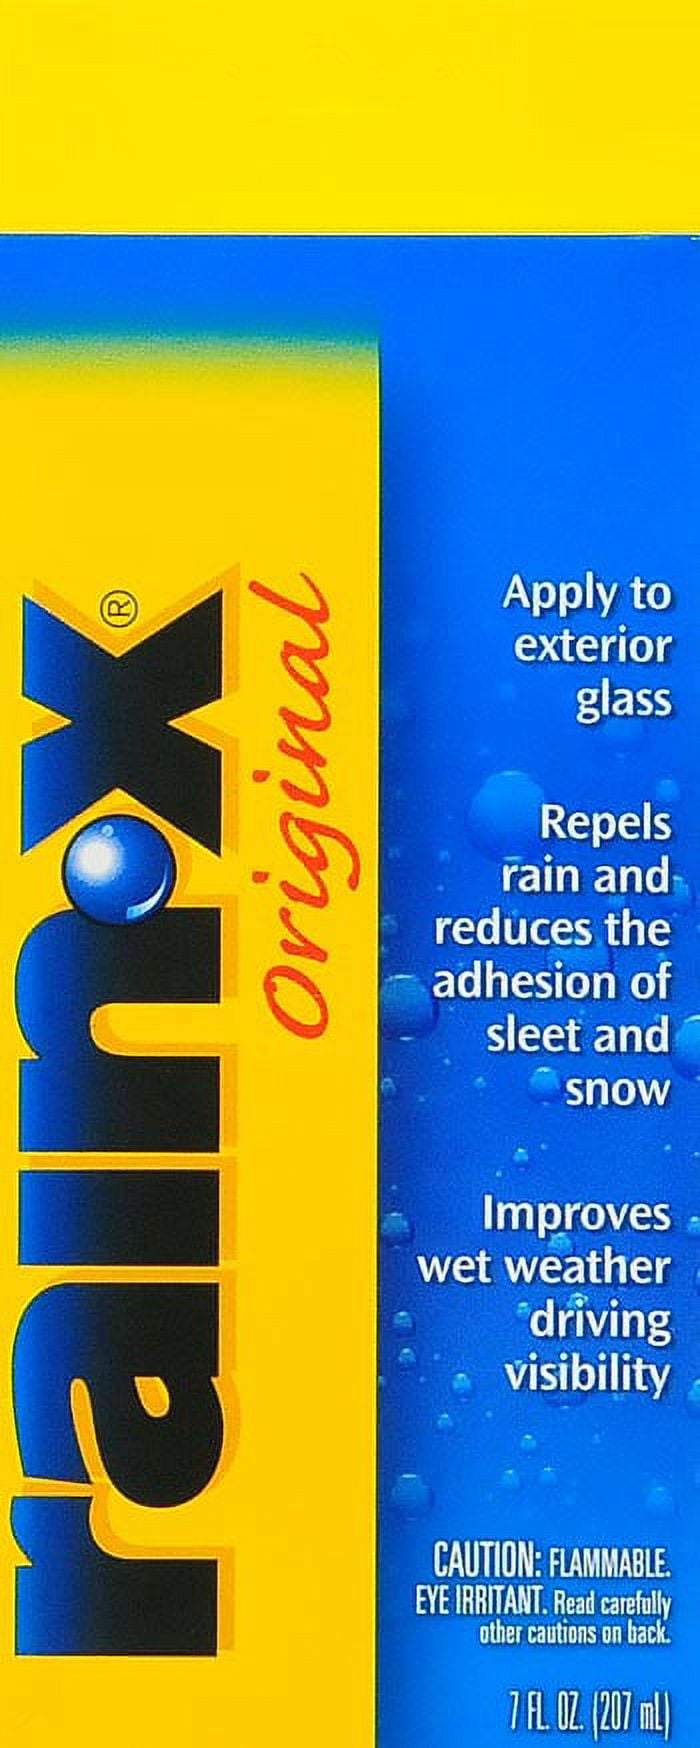 Rain-X Original Glass Cleaner Treatment Improves Driving Visibility 7oz.  Bottle for sale online